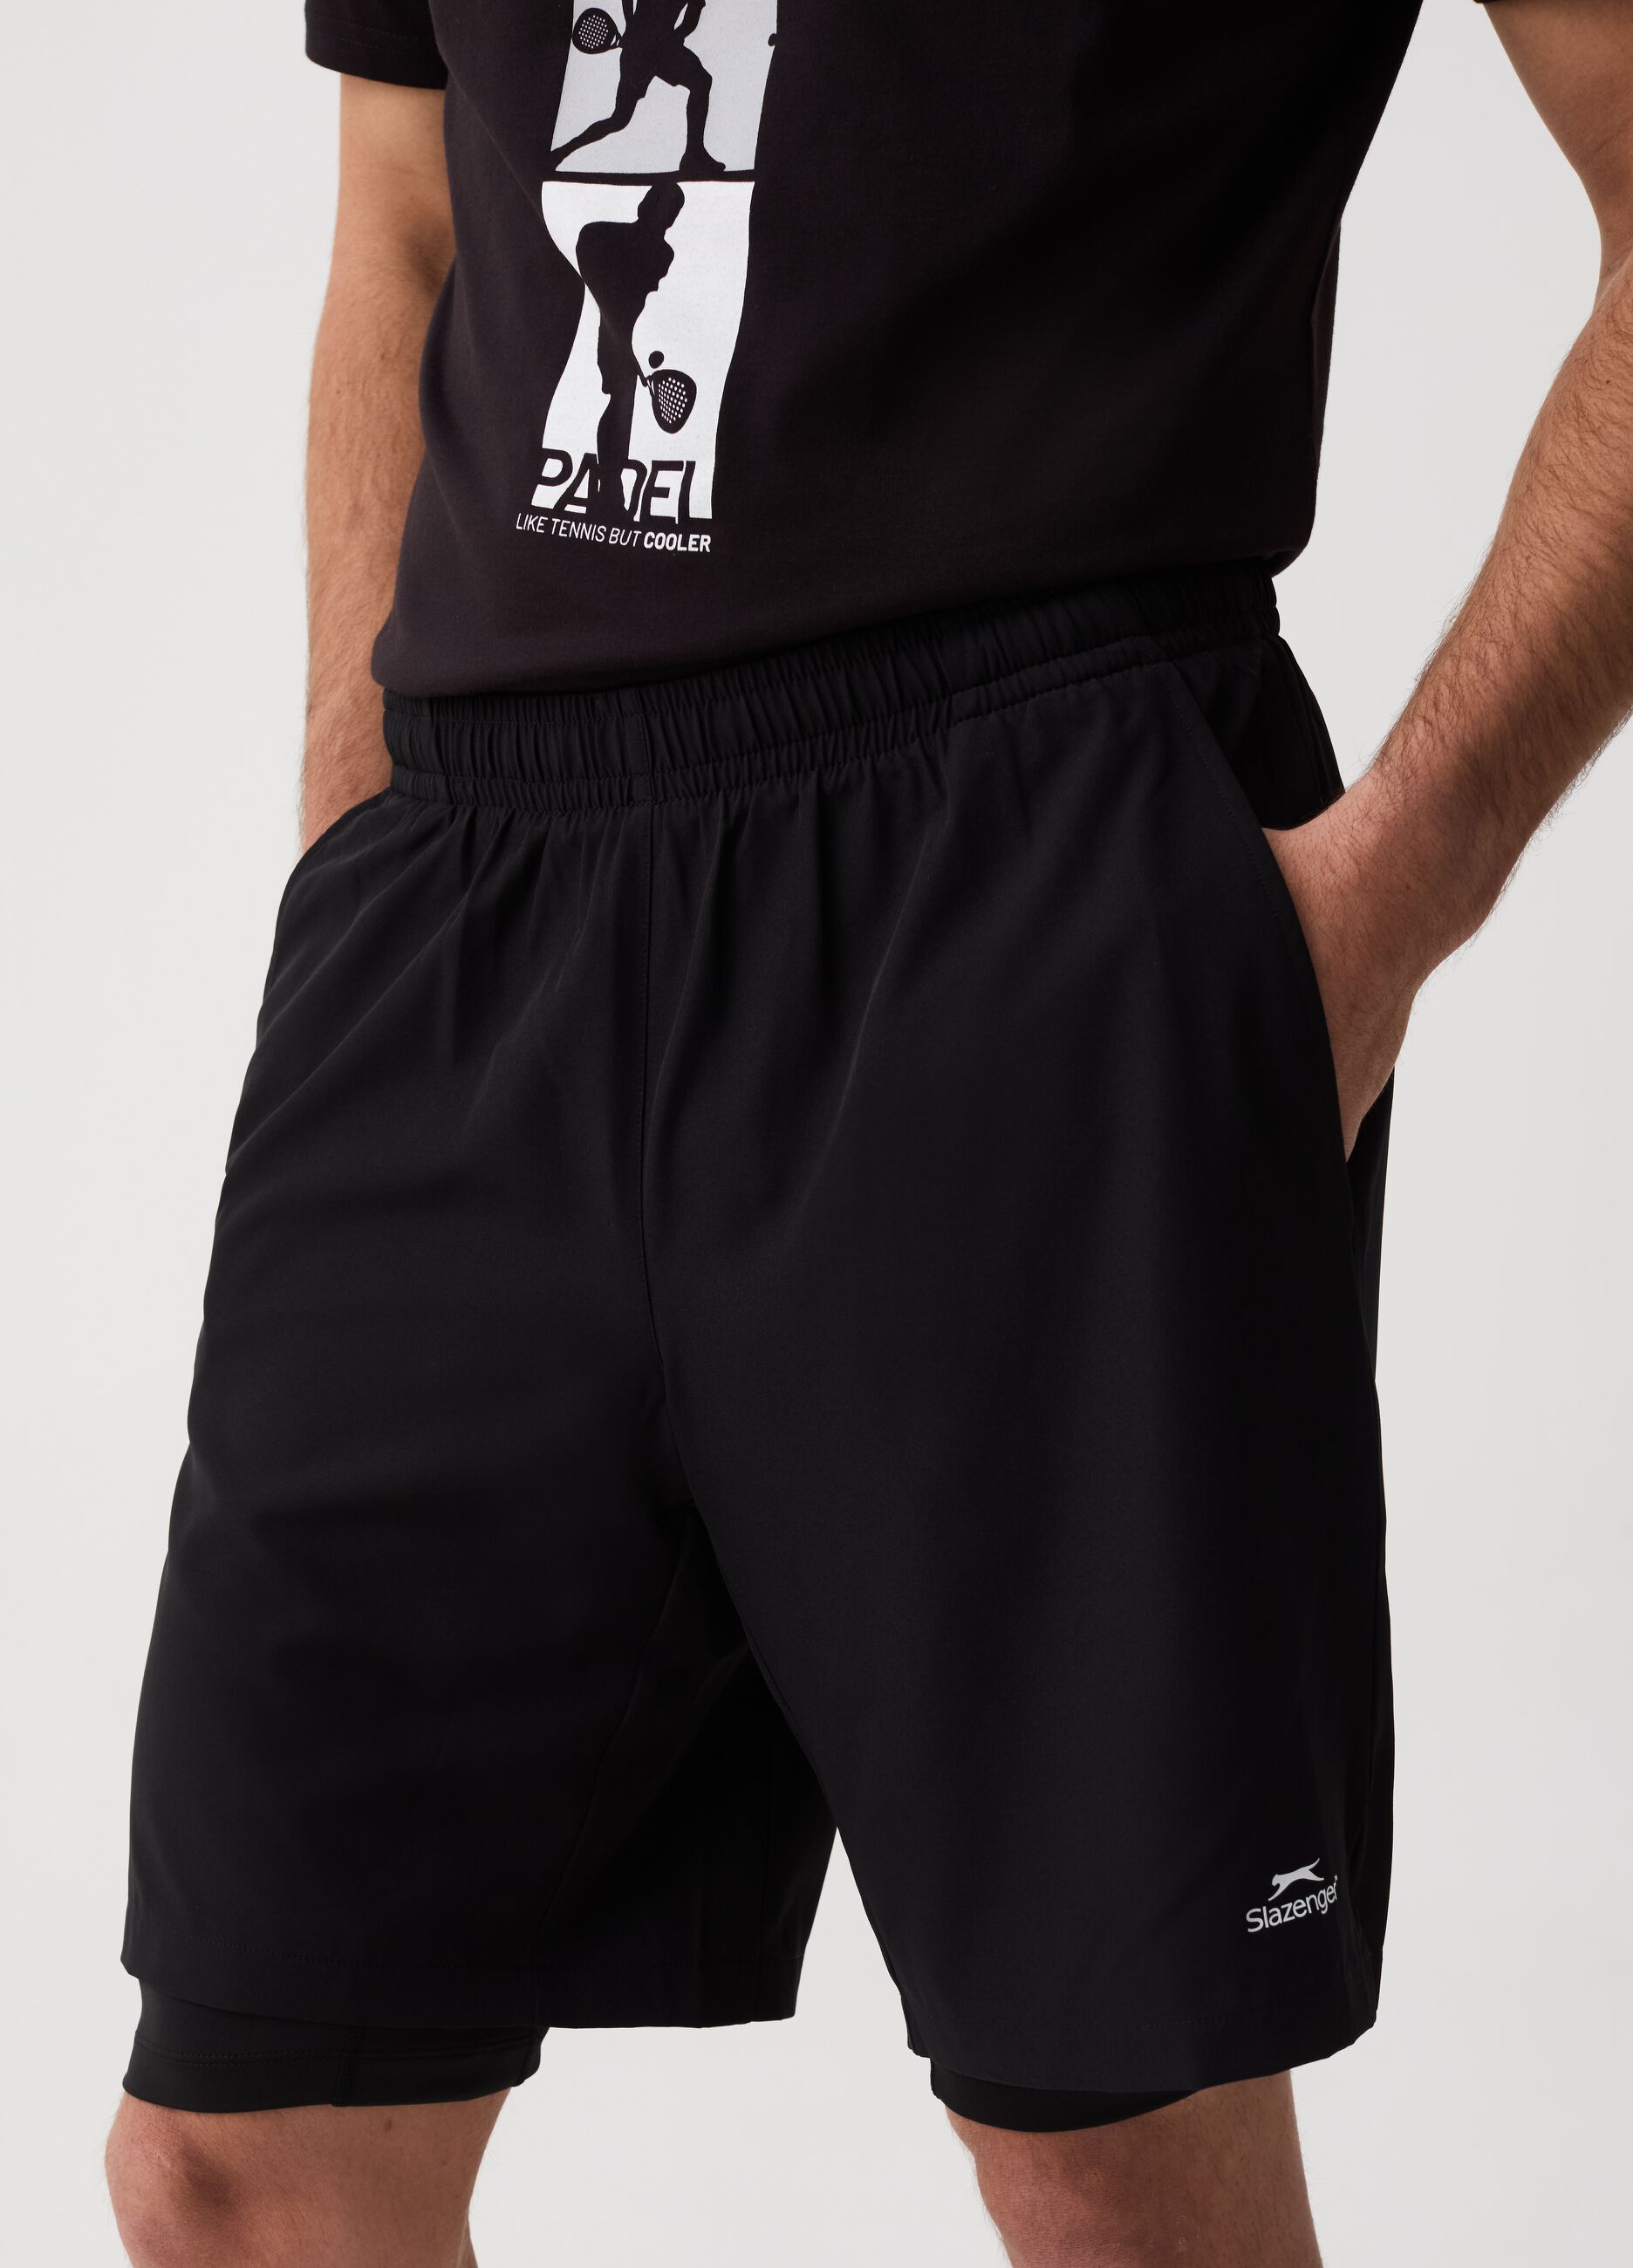 Slazenger quick-dry tennis-fit Bermuda shorts